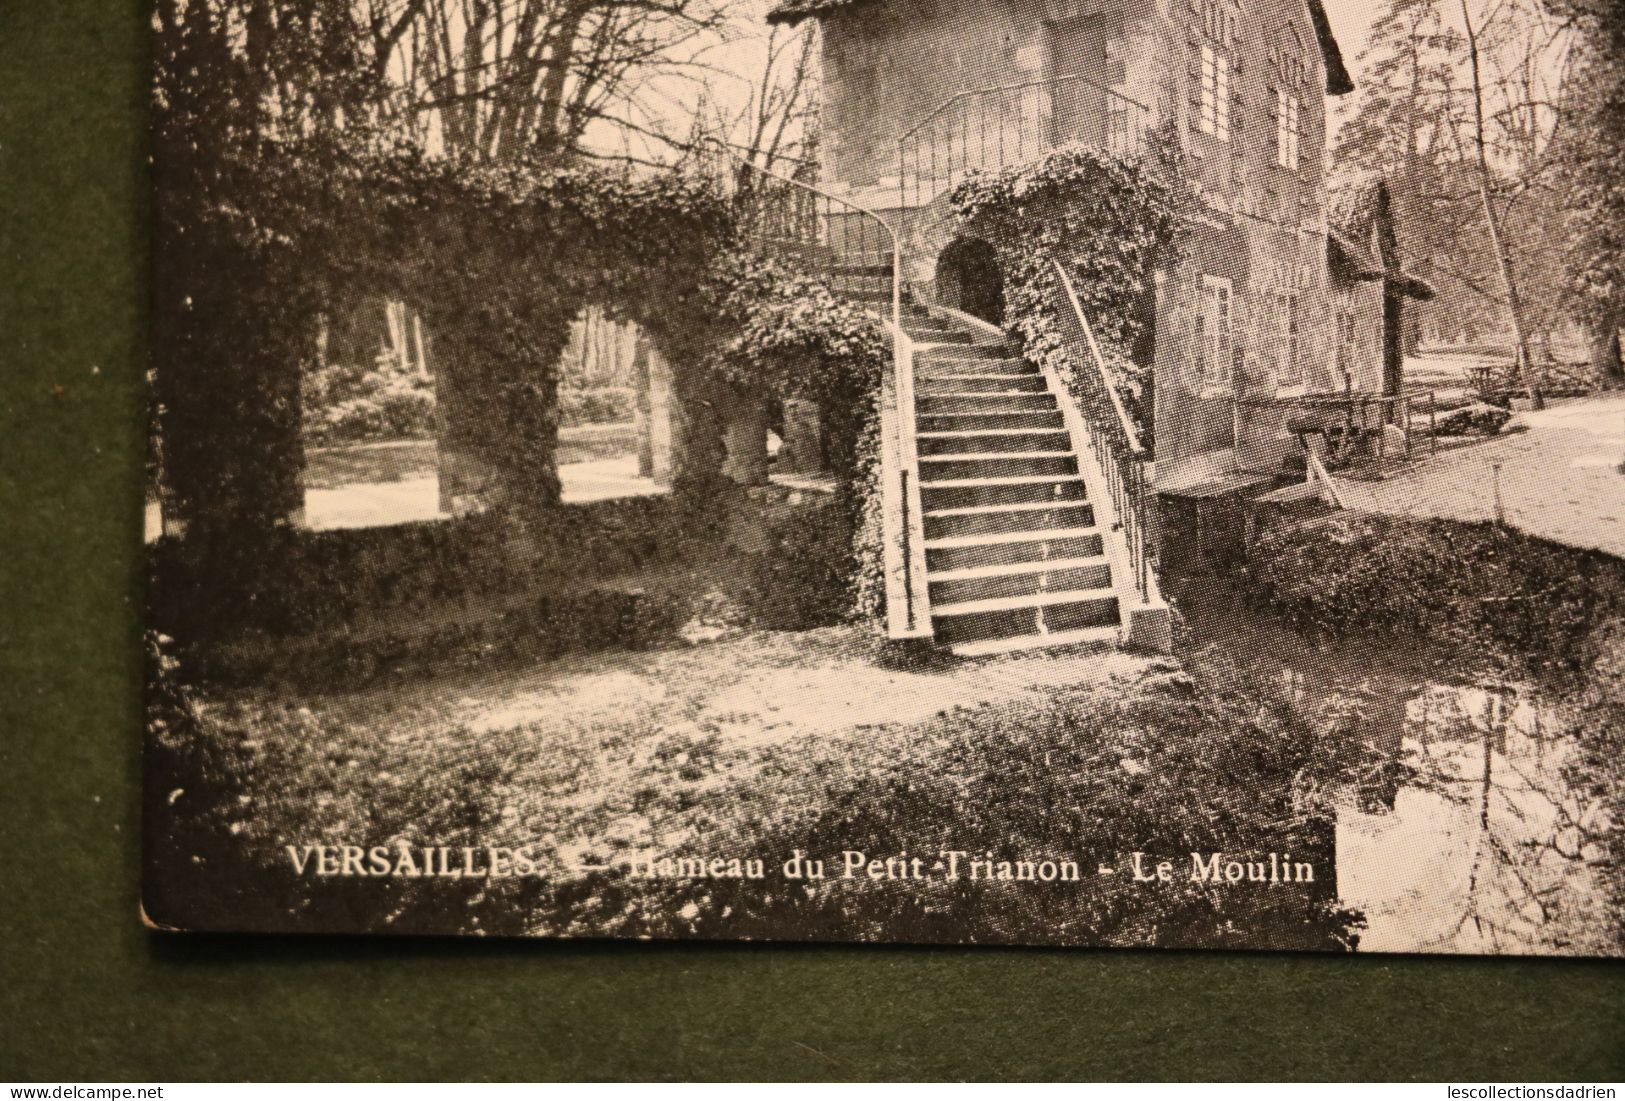 Carte Postale Ancienne - Versailles Hameau Du Petit Trianon Le Moulin - Sonstige Sehenswürdigkeiten